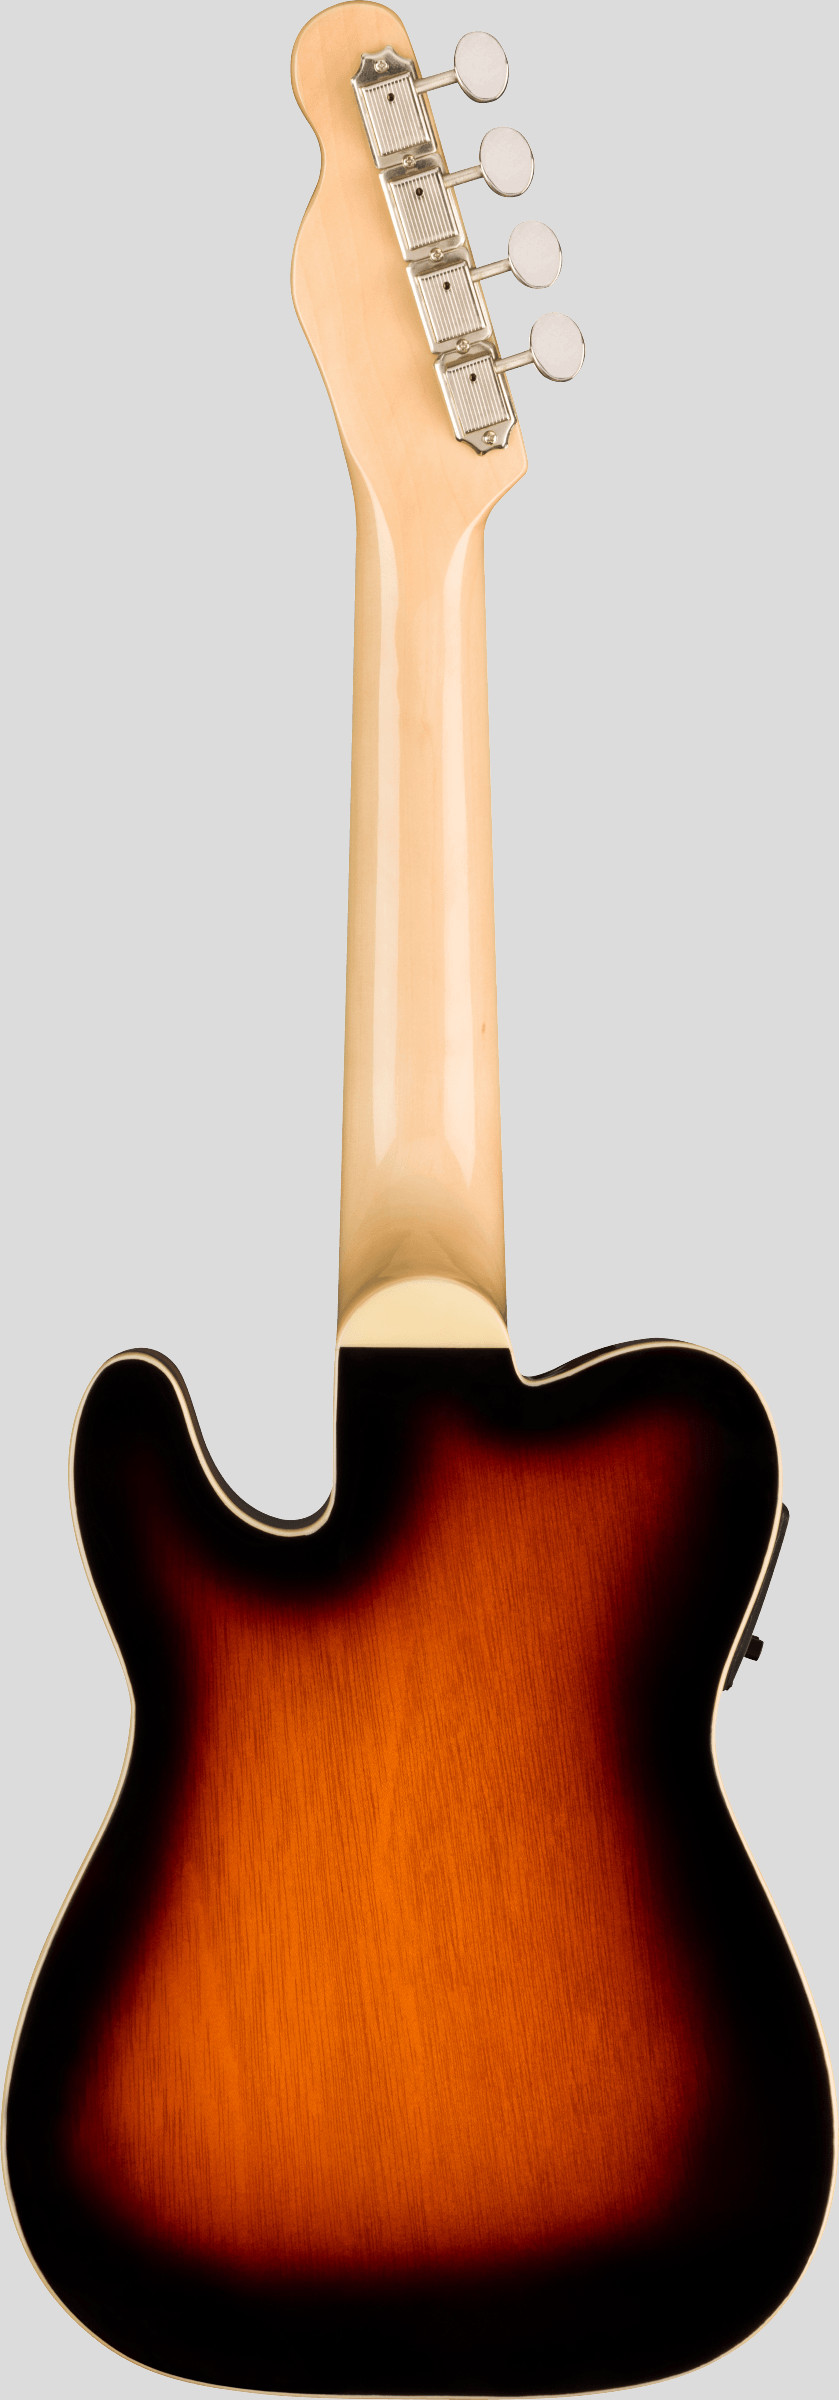 Fender Fullerton Telecaster Concert Ukulele 2-Color Sunburst 2